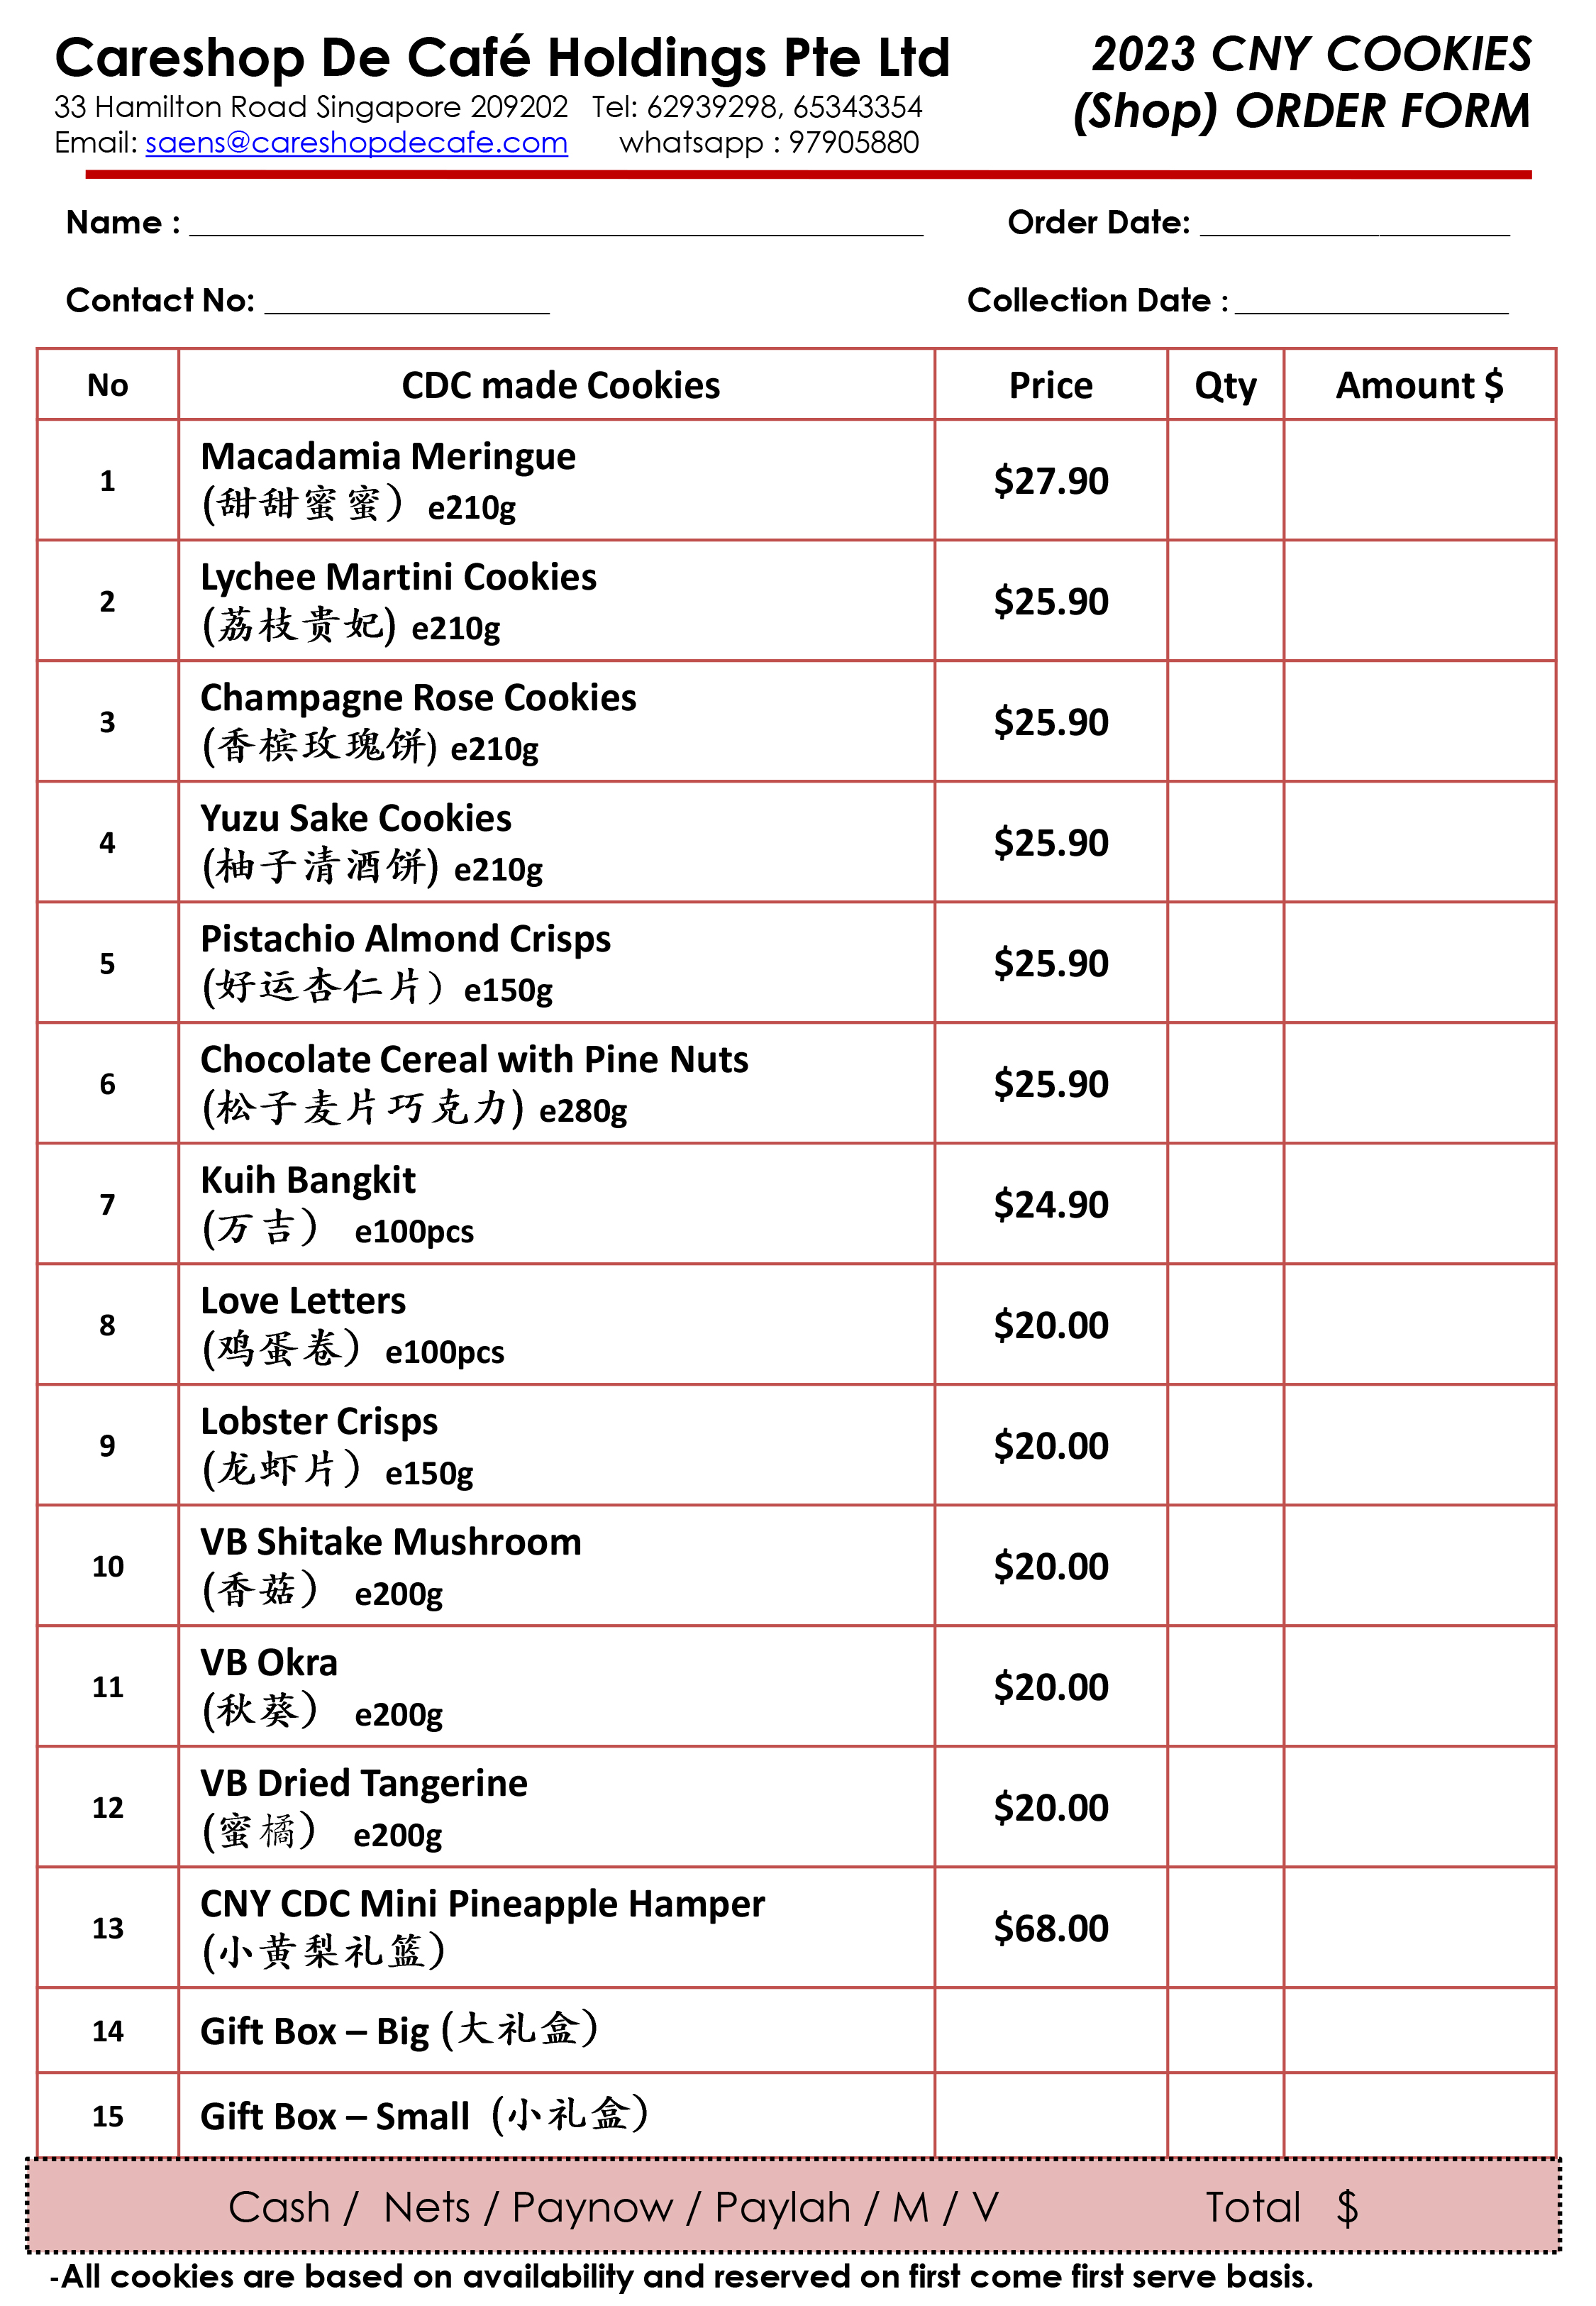 CDC CNY Cookies - Shop Order Form 2023